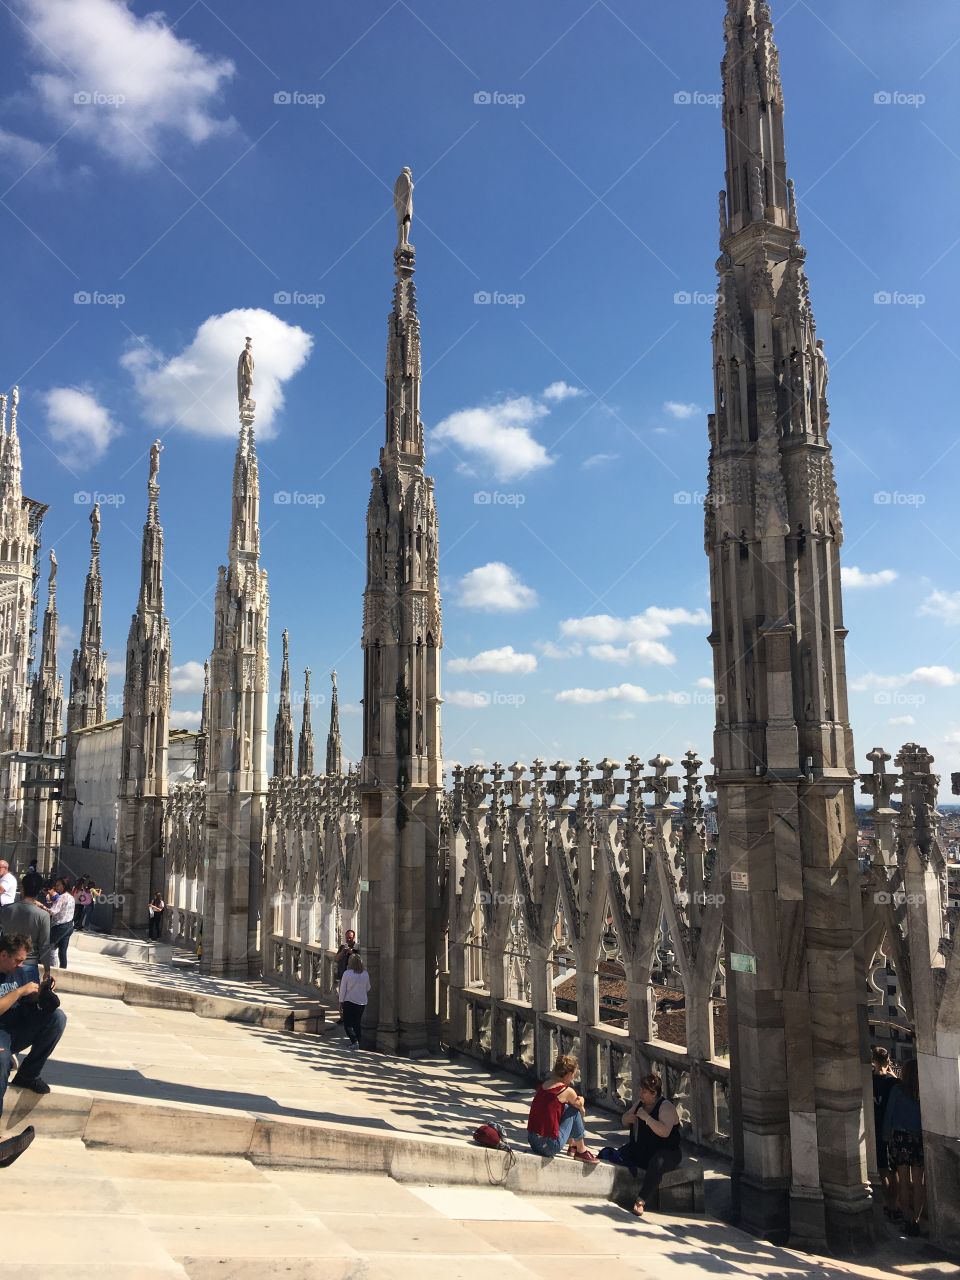 Rooftop at Duomo